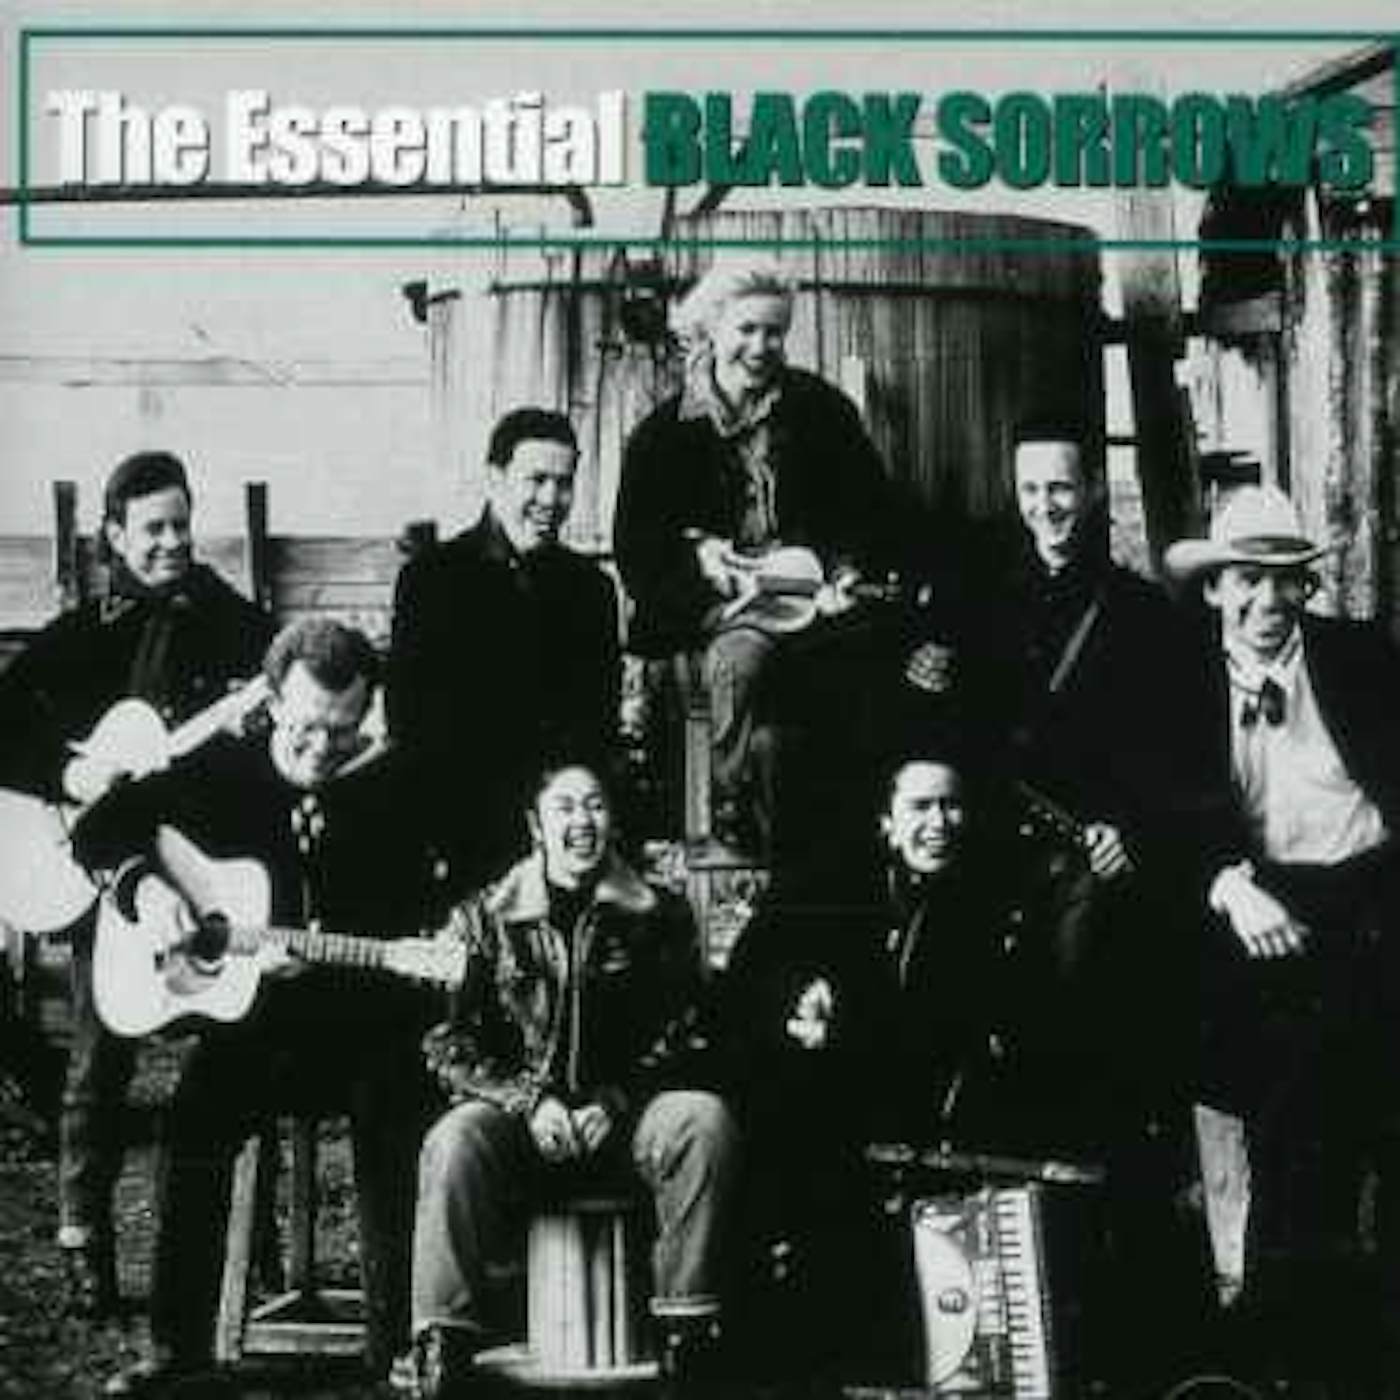 The Black Sorrows ESSENTIAL CD